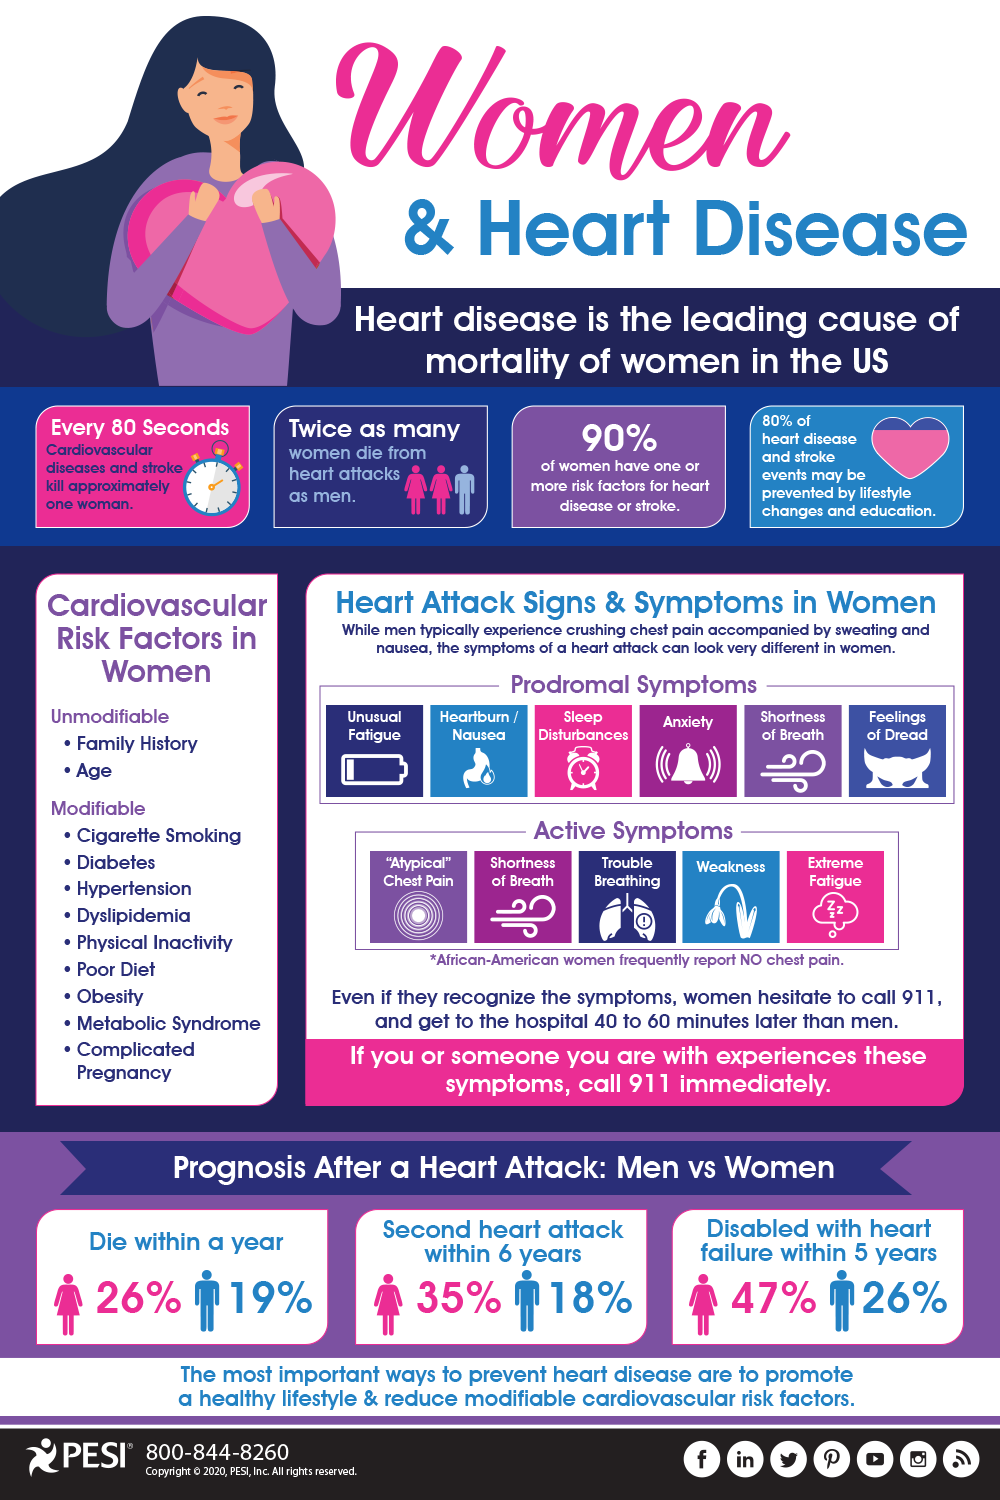 Women & Heart Disease infographic